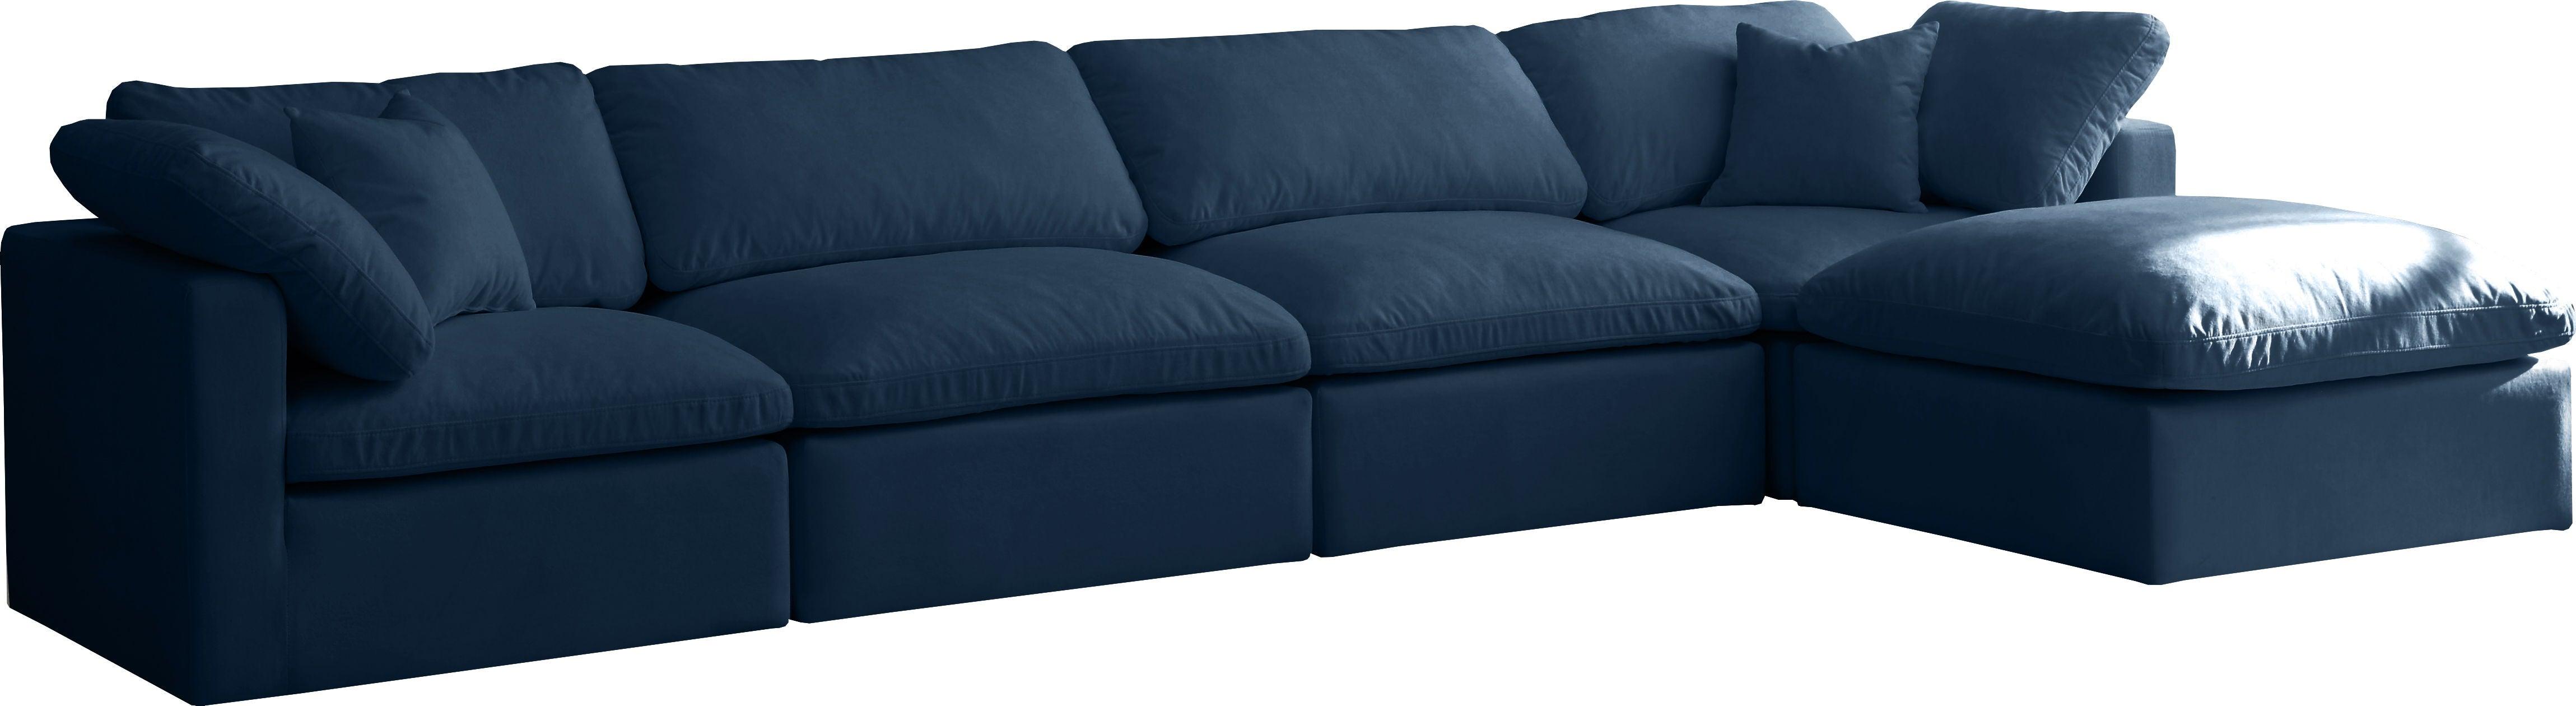 Meridian Furniture - Plush - Velvet Standart Comfort Modular Sectional - Navy - Modern & Contemporary - 5th Avenue Furniture